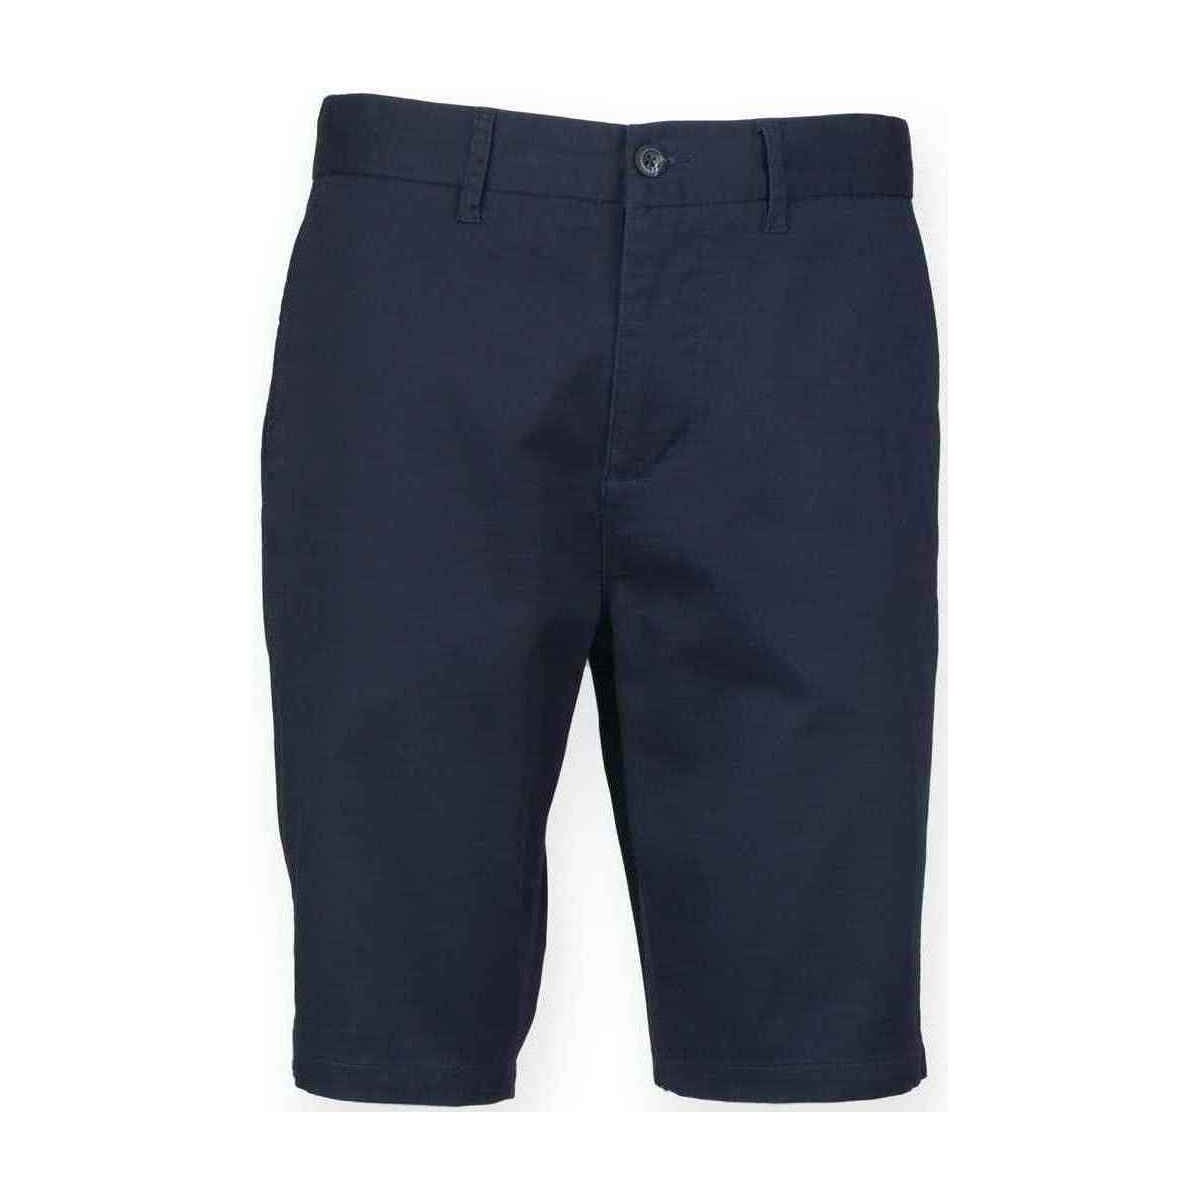 Vêtements Homme Shorts / Bermudas Front Row FR605 Bleu